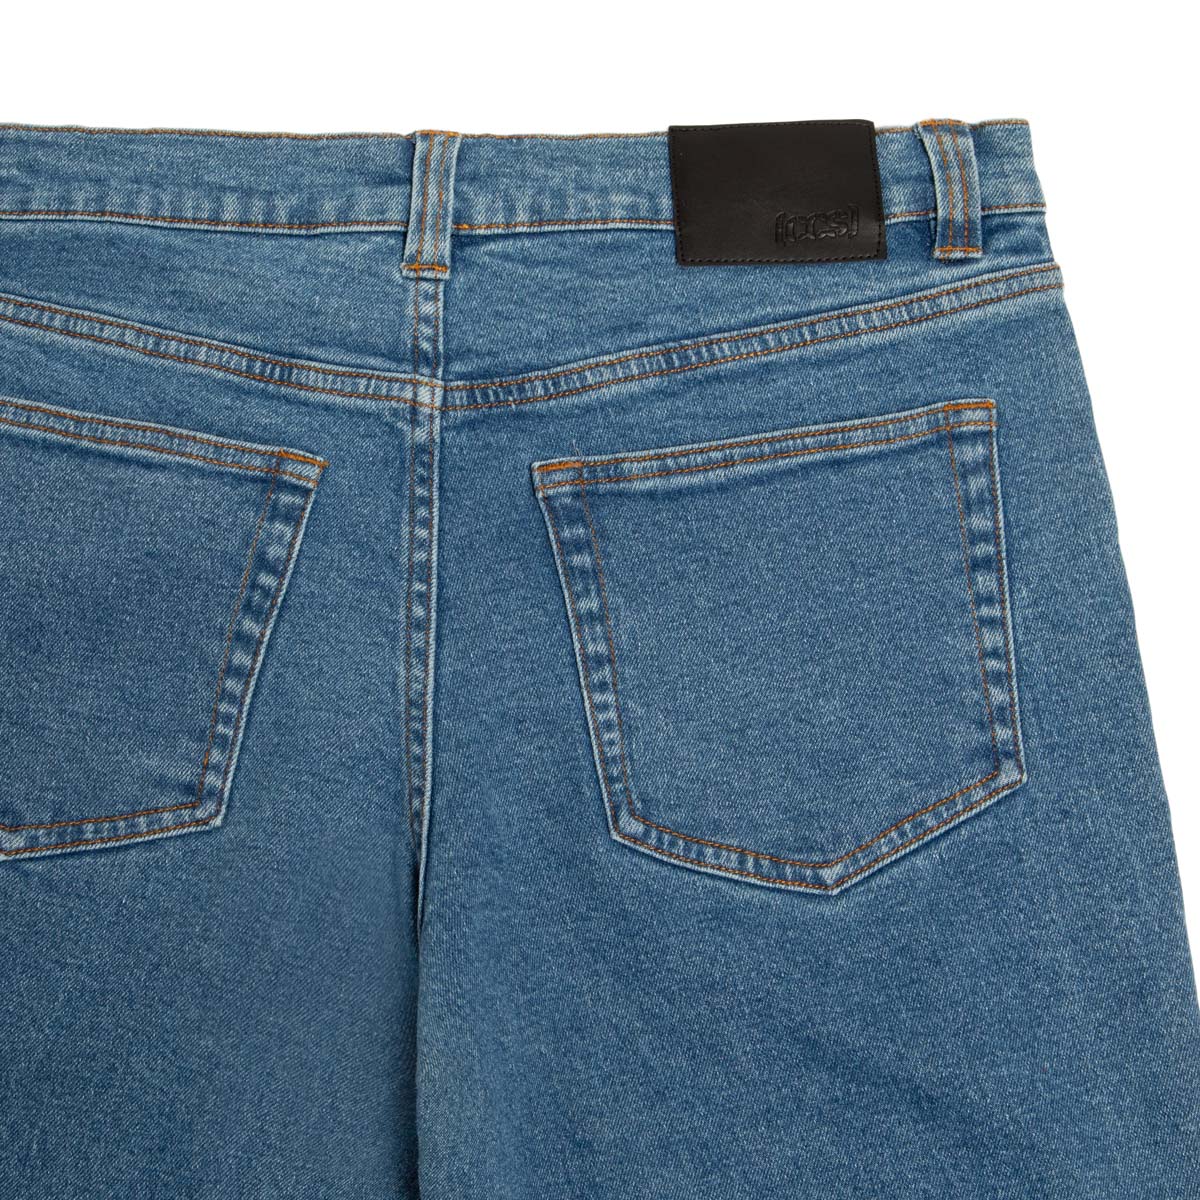 CCS 12oz Stretch Slim Denim Jeans - 12oz Rinse image 6